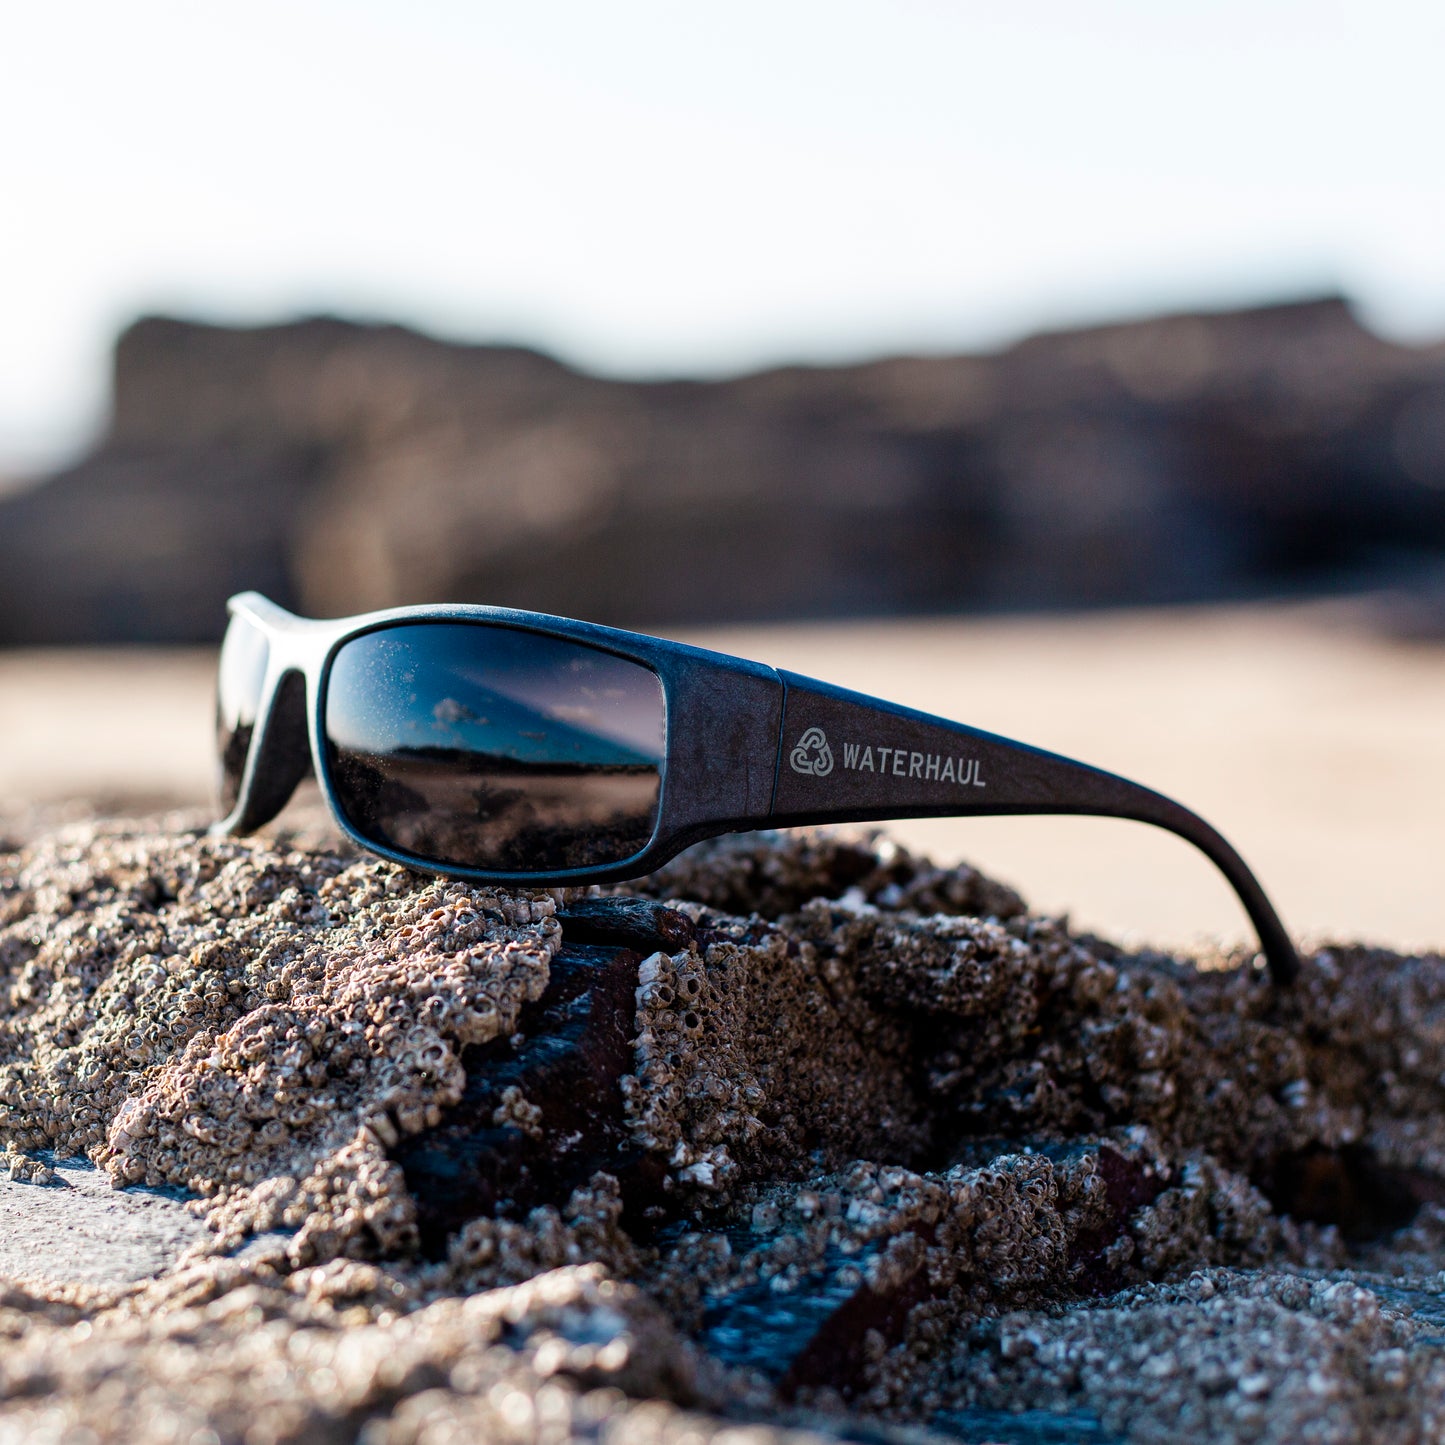 Zennor Waterhaul Sunglasses